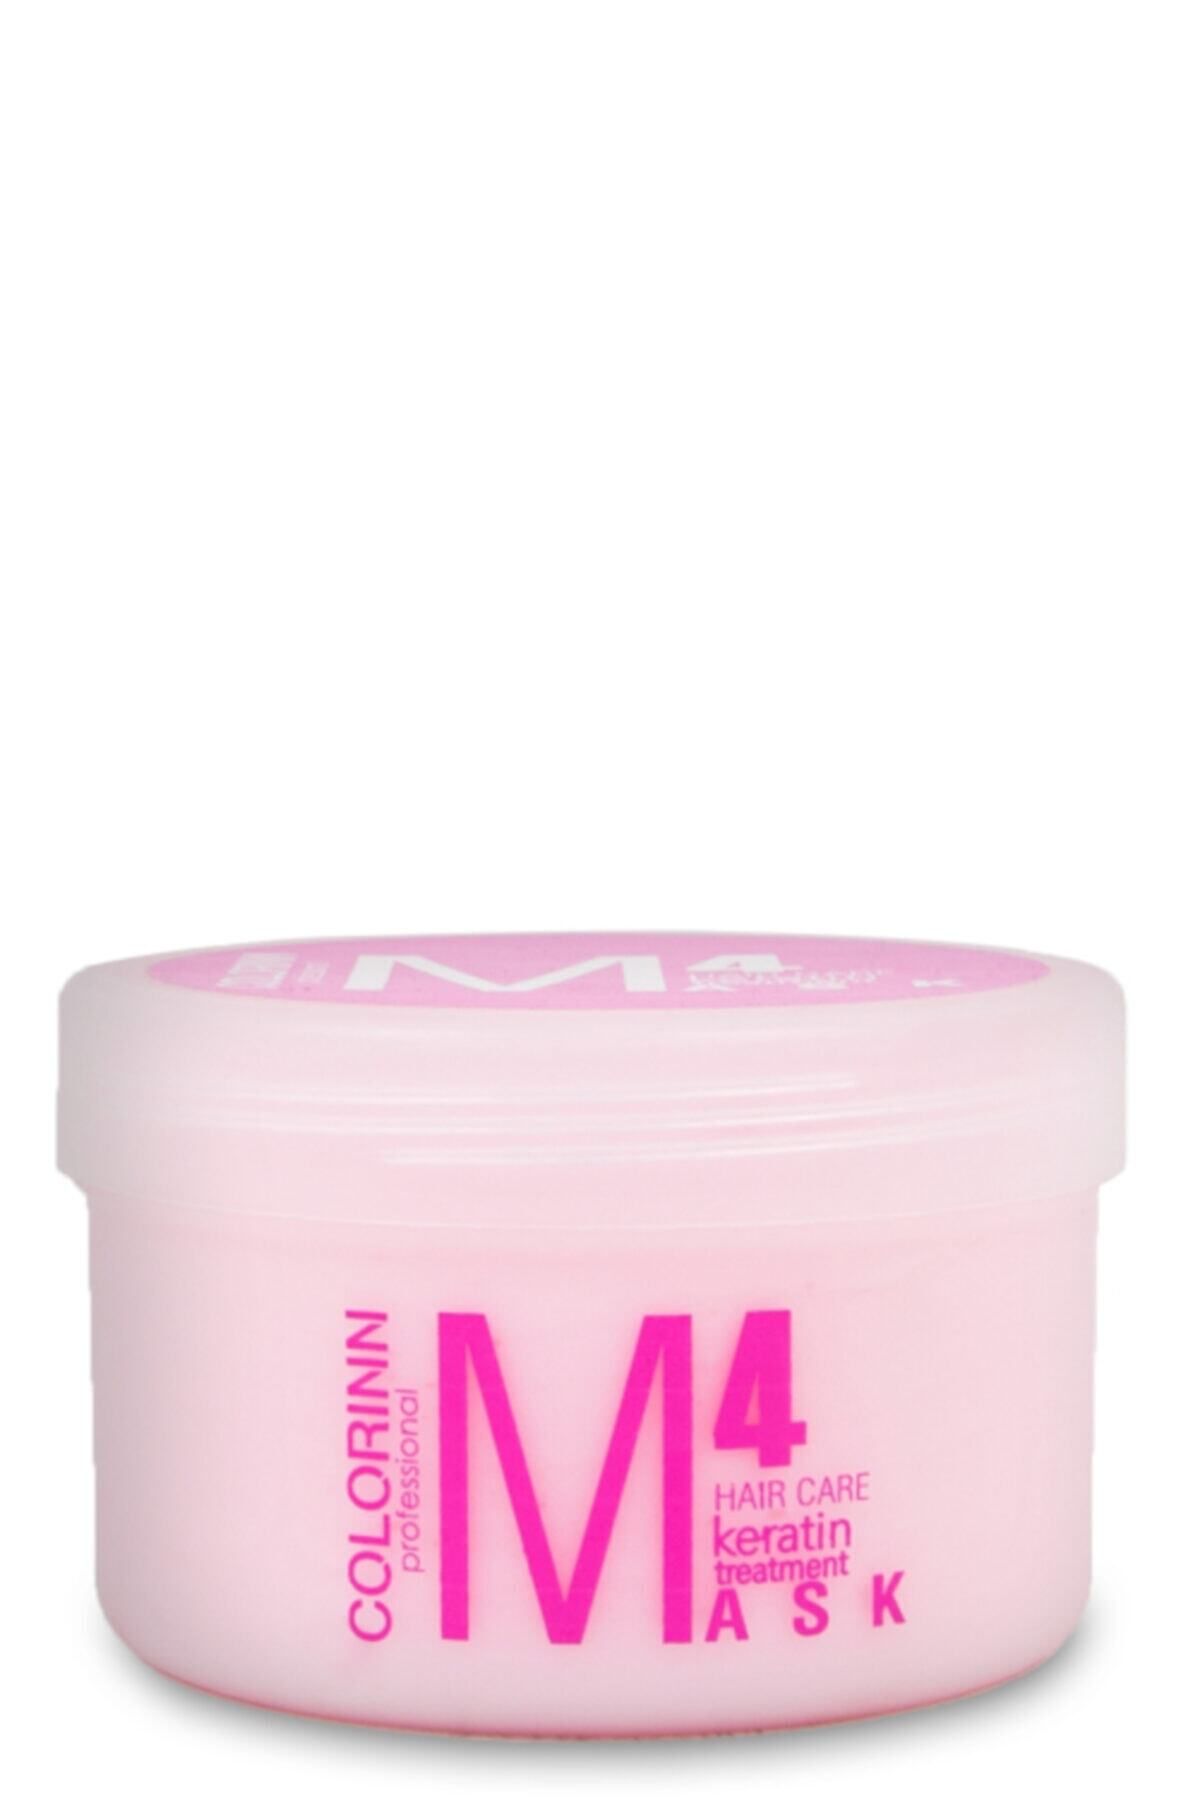 Colorinn M4 Keratin Treatment Hair Care Mask